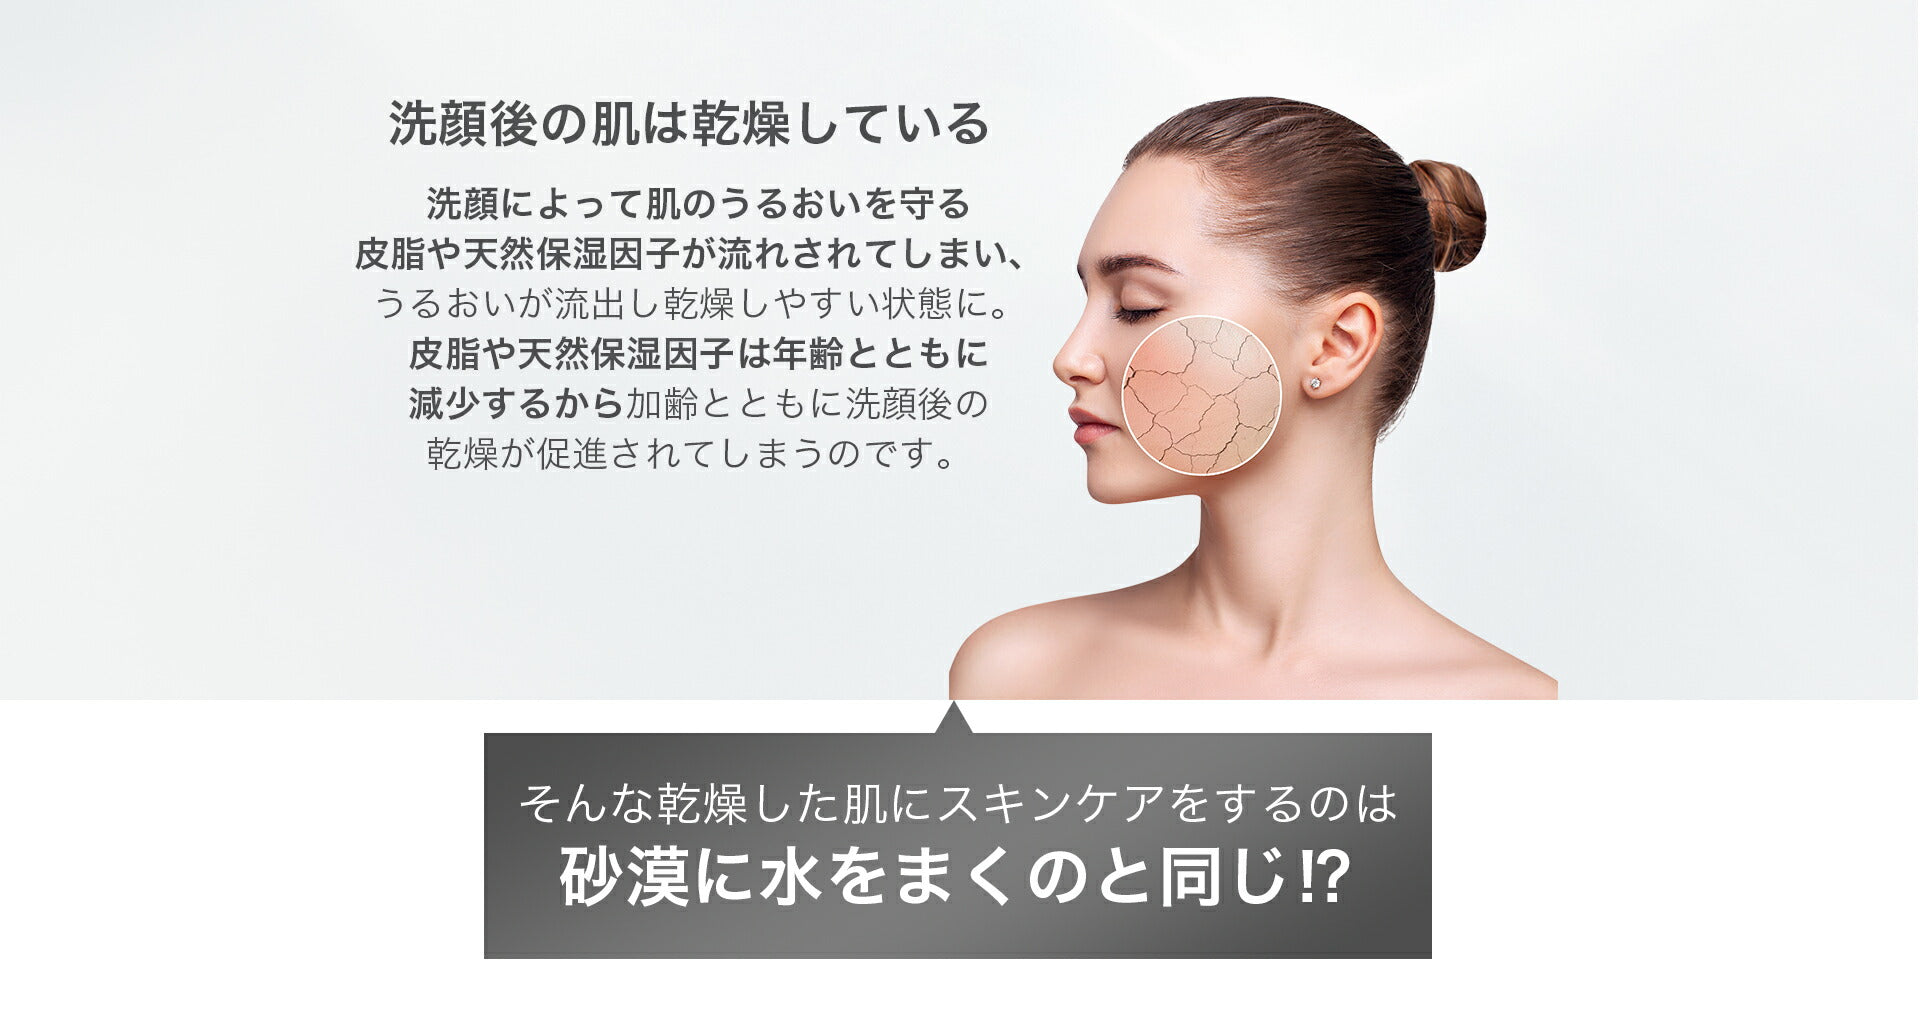 COCOCHI AG Ultimate Facial Essence Cream 20g & Cream Mask 90g